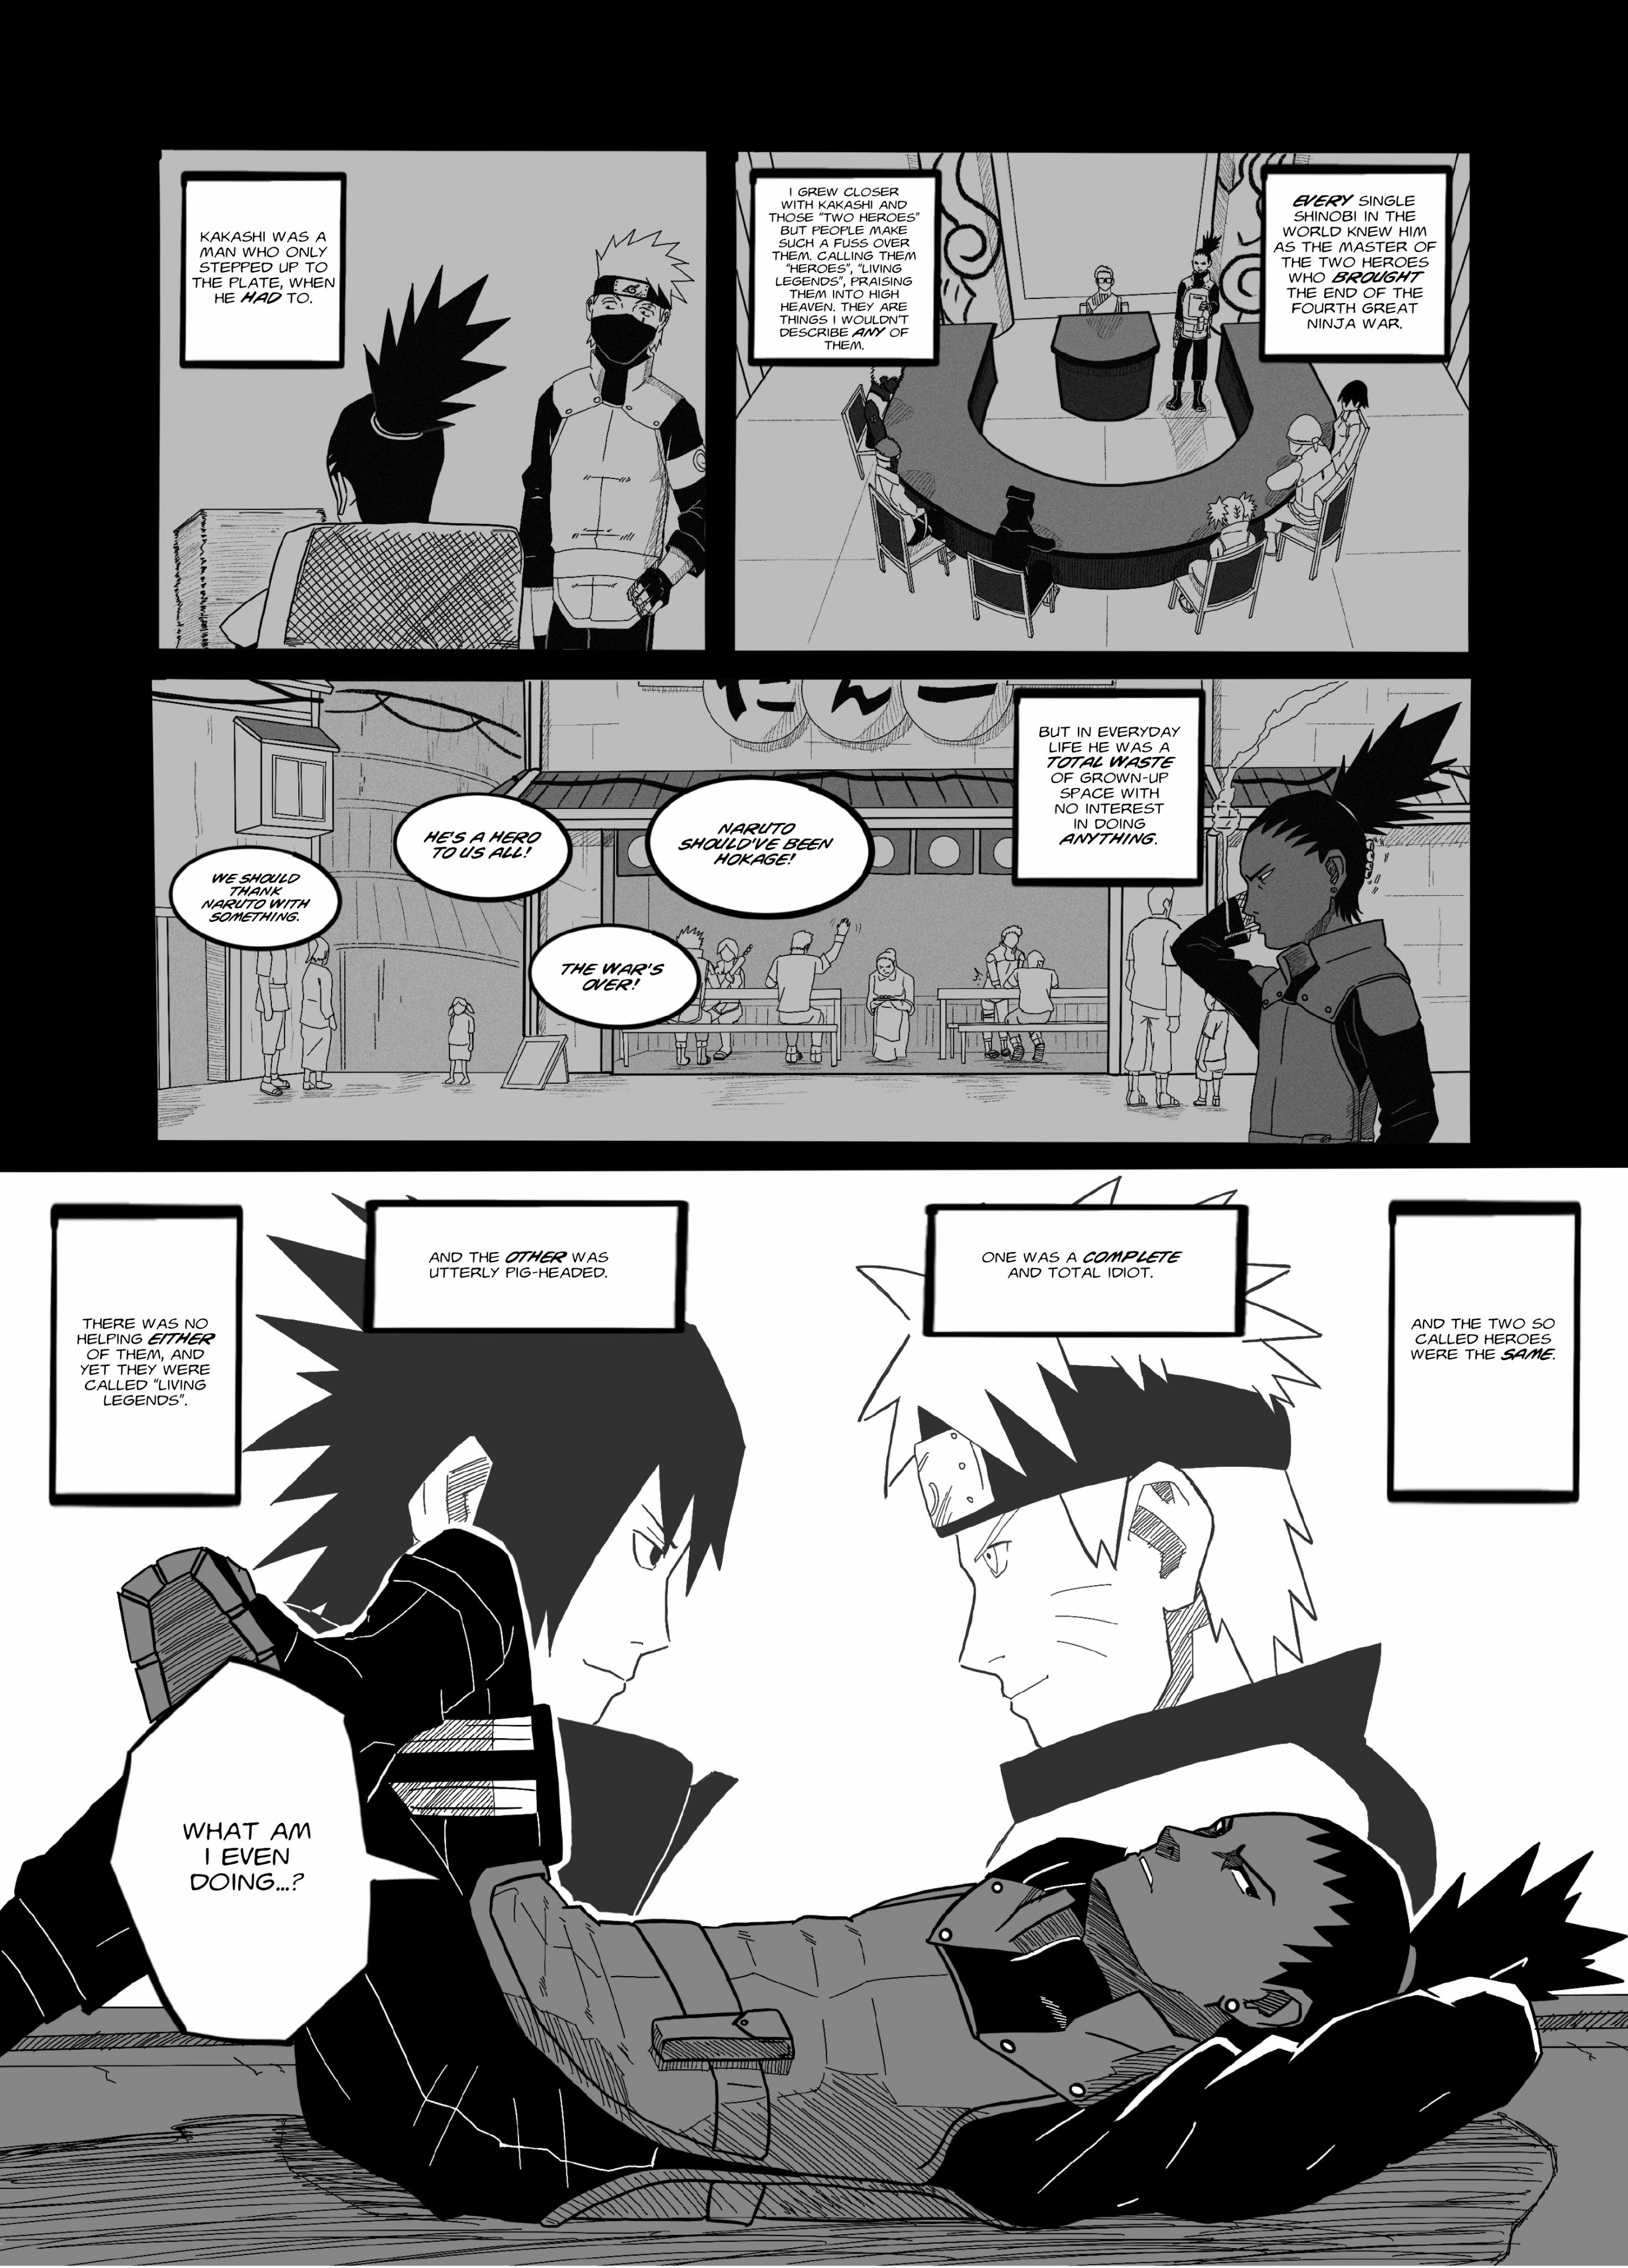  Naruto: Shikamaru's Story-A Cloud Drifting in the